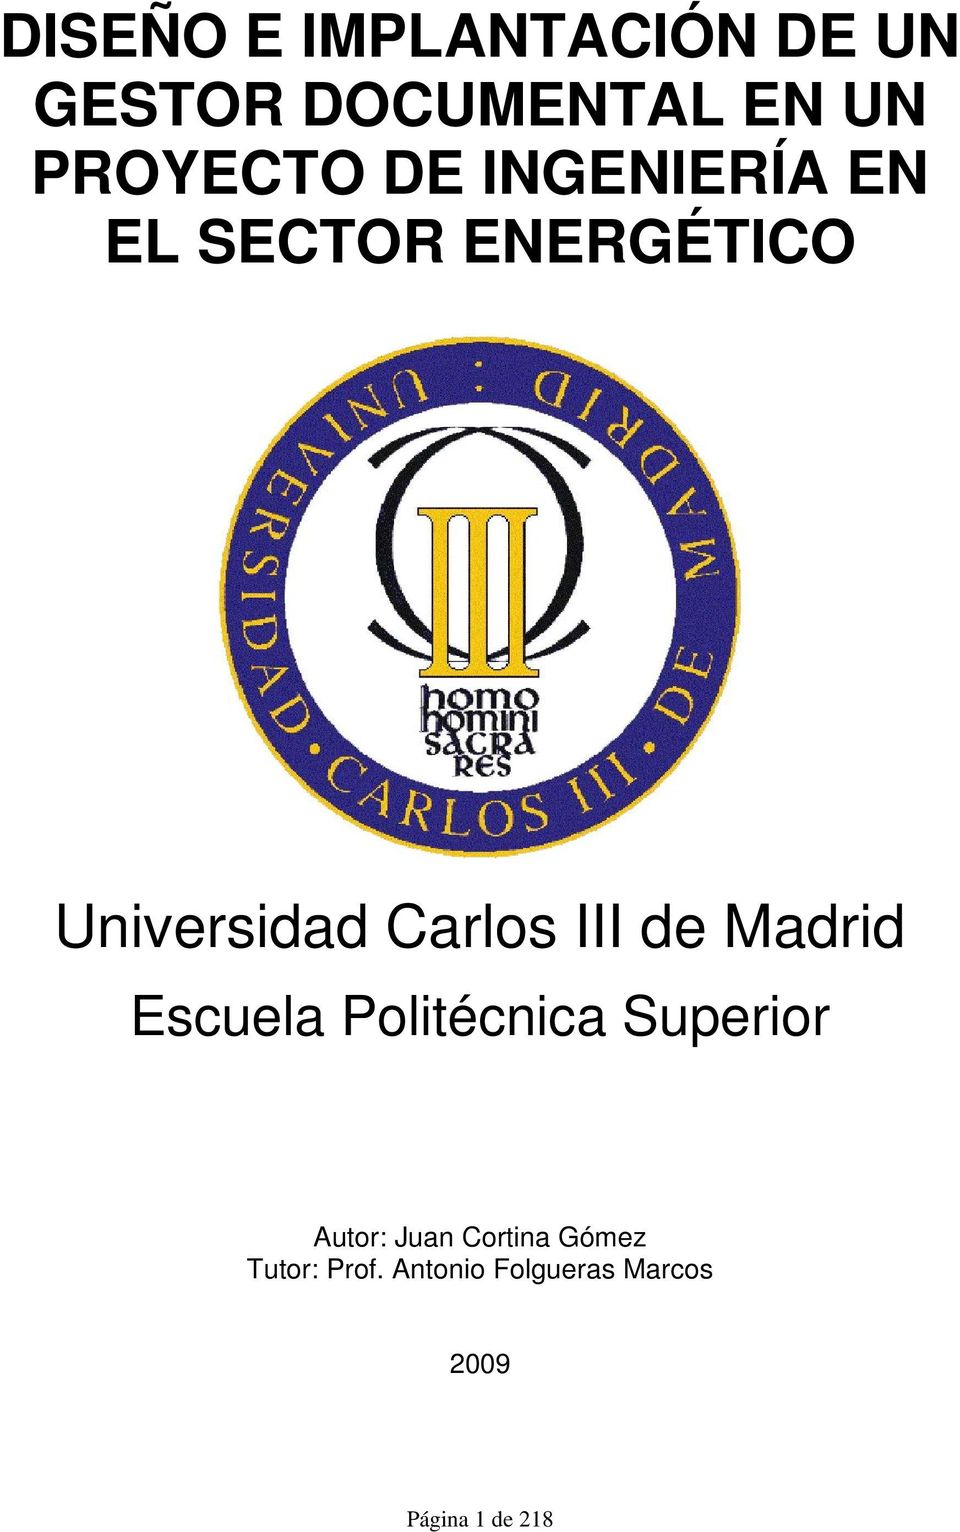 de Madrid Escuela Politécnica Superior Autor: Juan Cortina